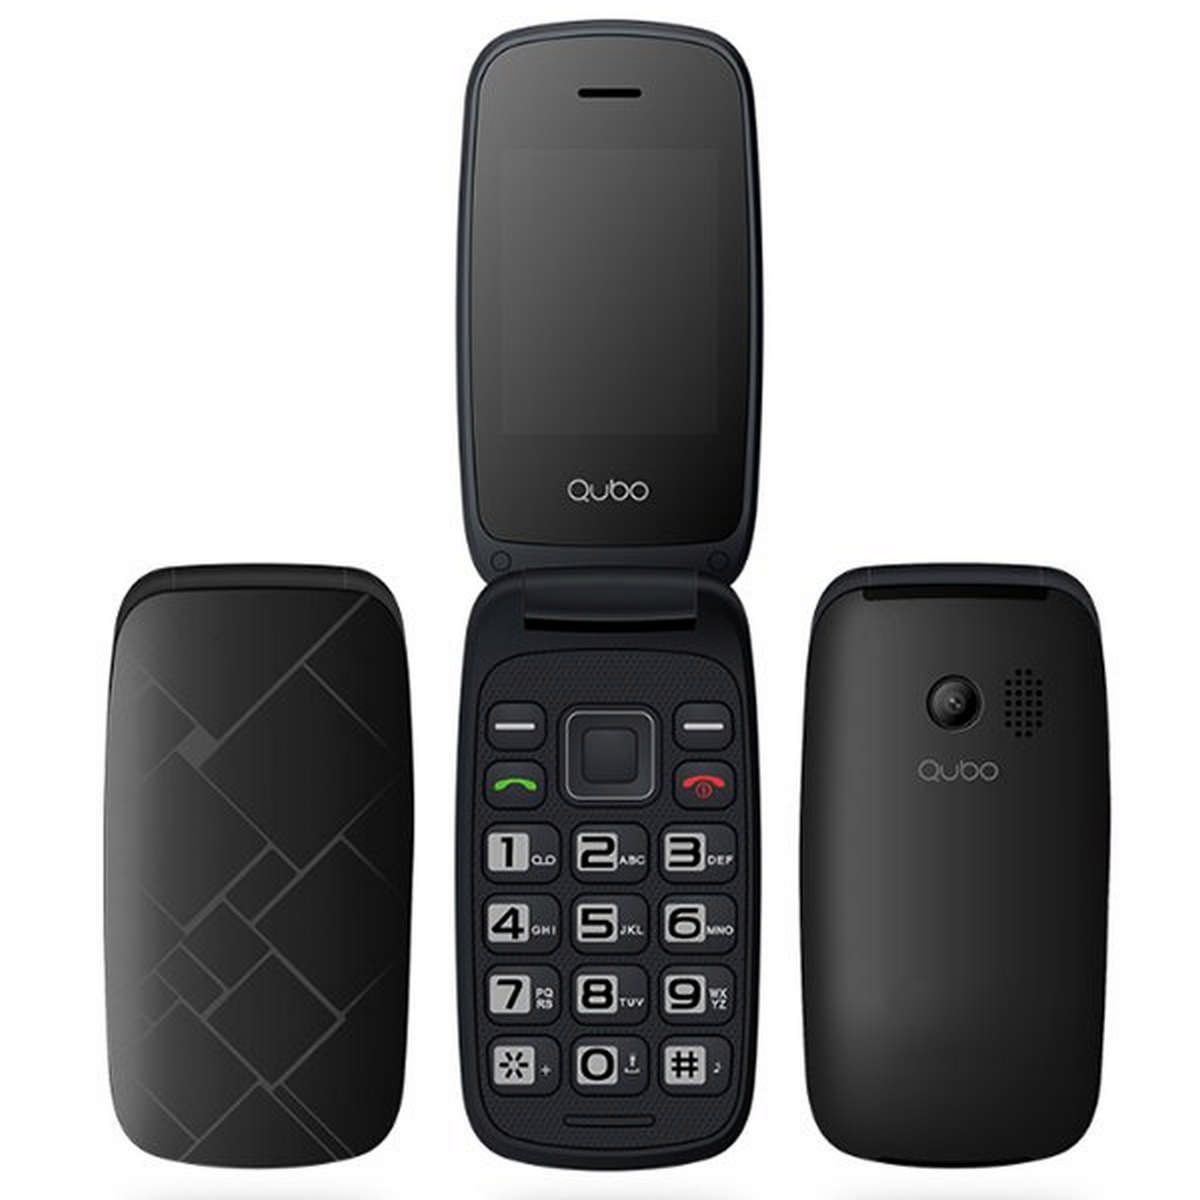 Libre Qubo 610 cm 24“ bluetoothfmcámarasddual sim negro telefono 24 2.4